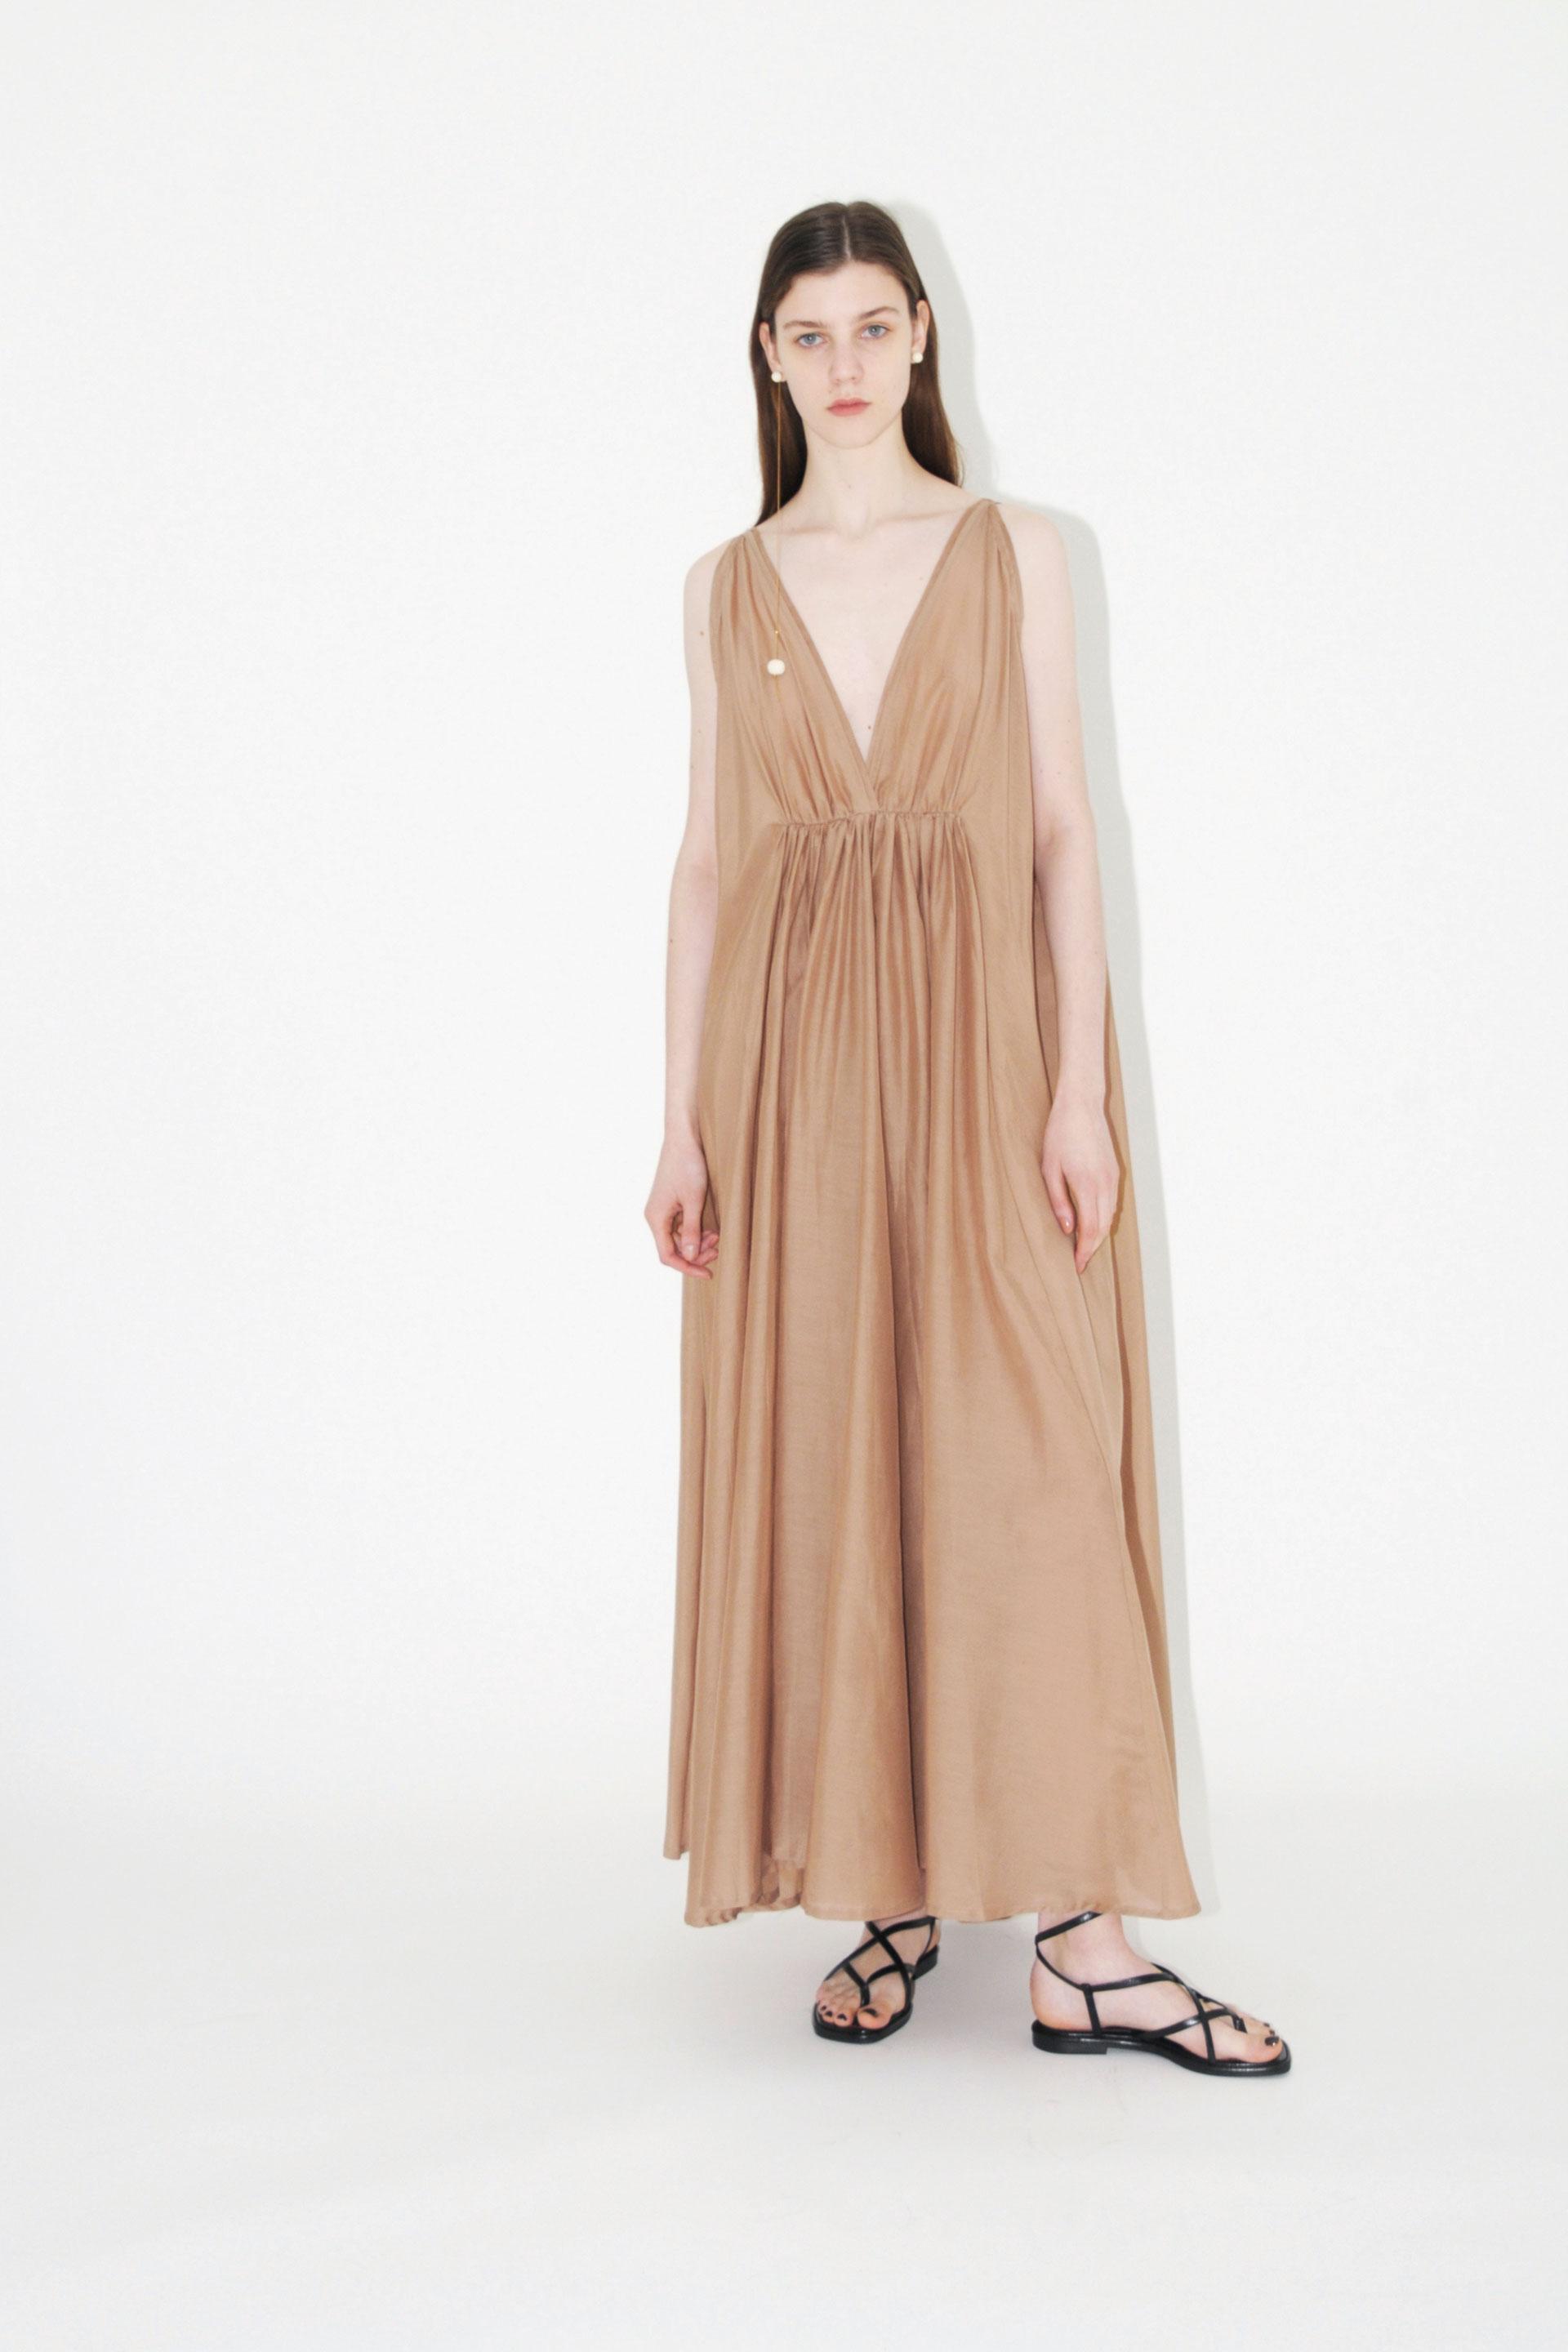 Kalita Cotton Clemence Maxi Dress in Beige (Natural) - Lyst